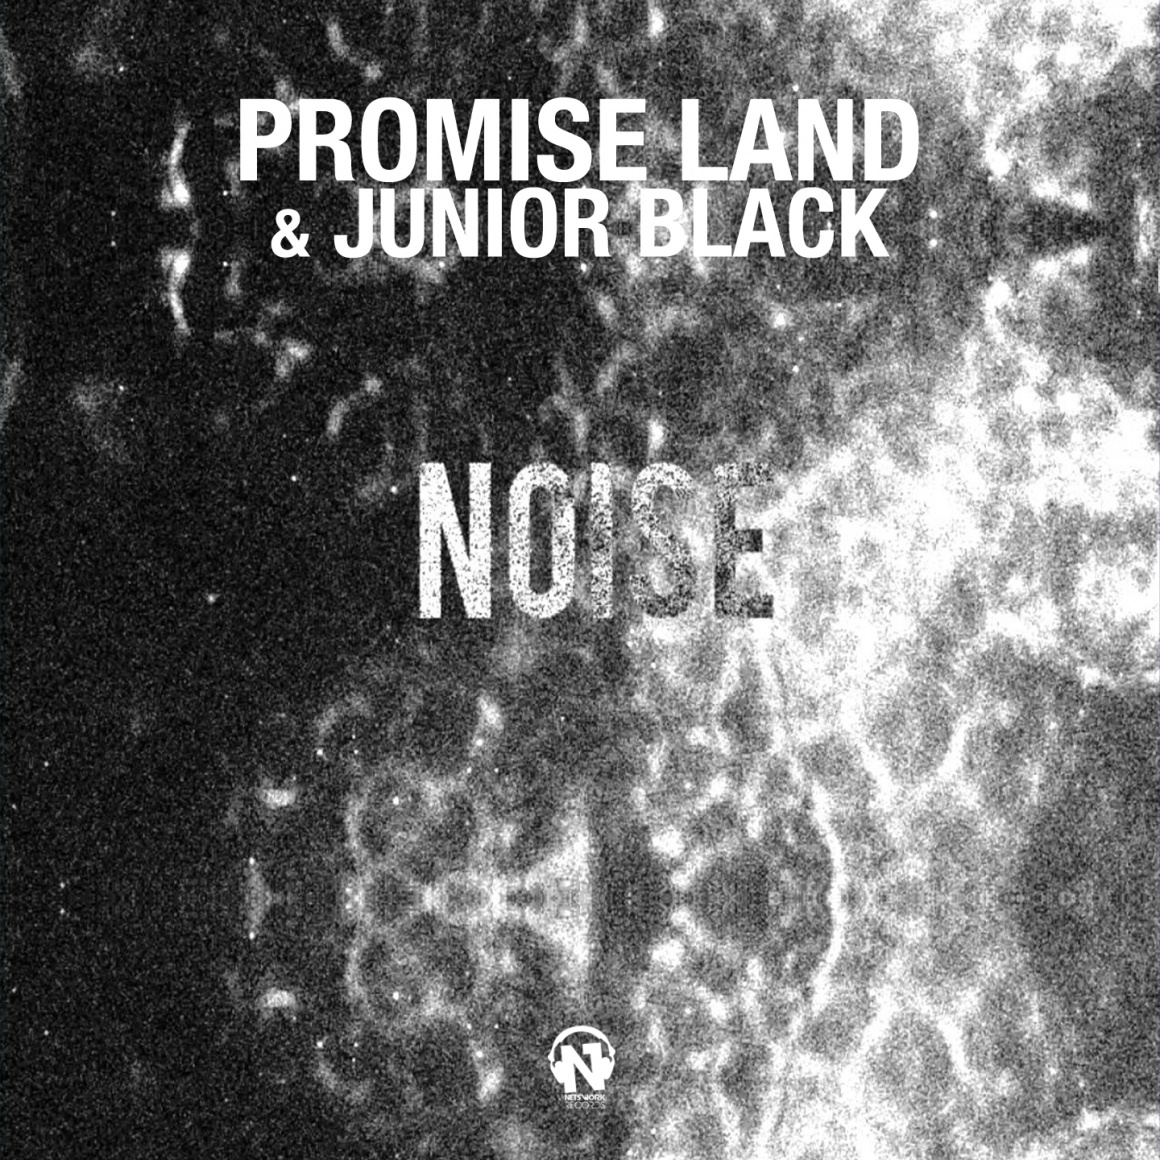 PROMISE LAND & JUNIOR BLACK  “Noise”